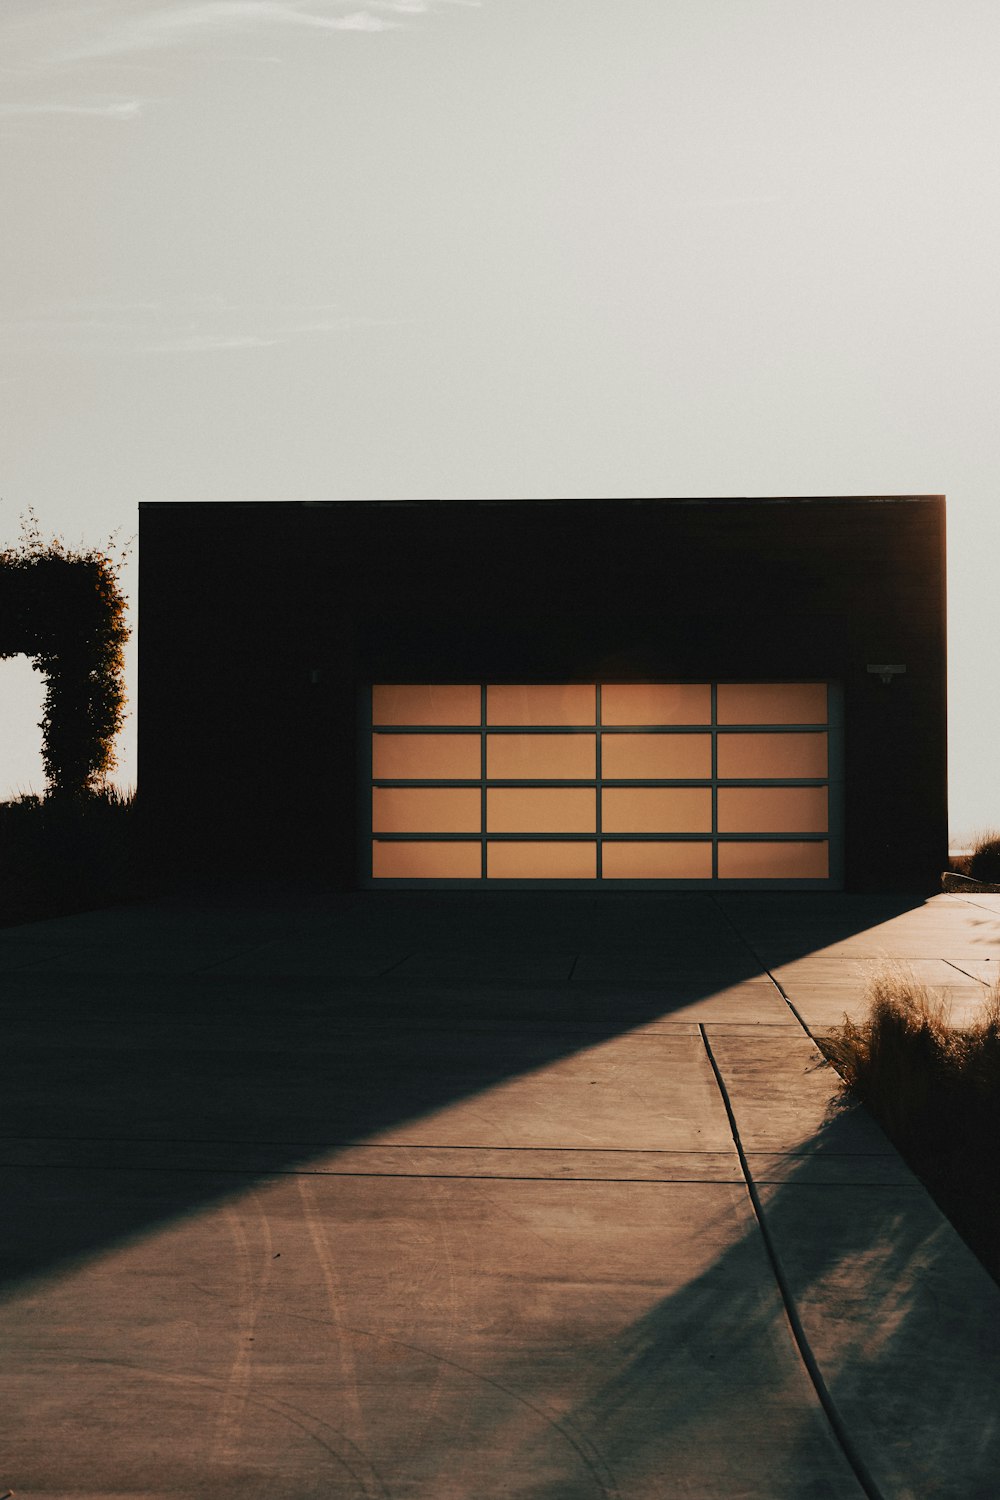 a garage door is open in front of a house